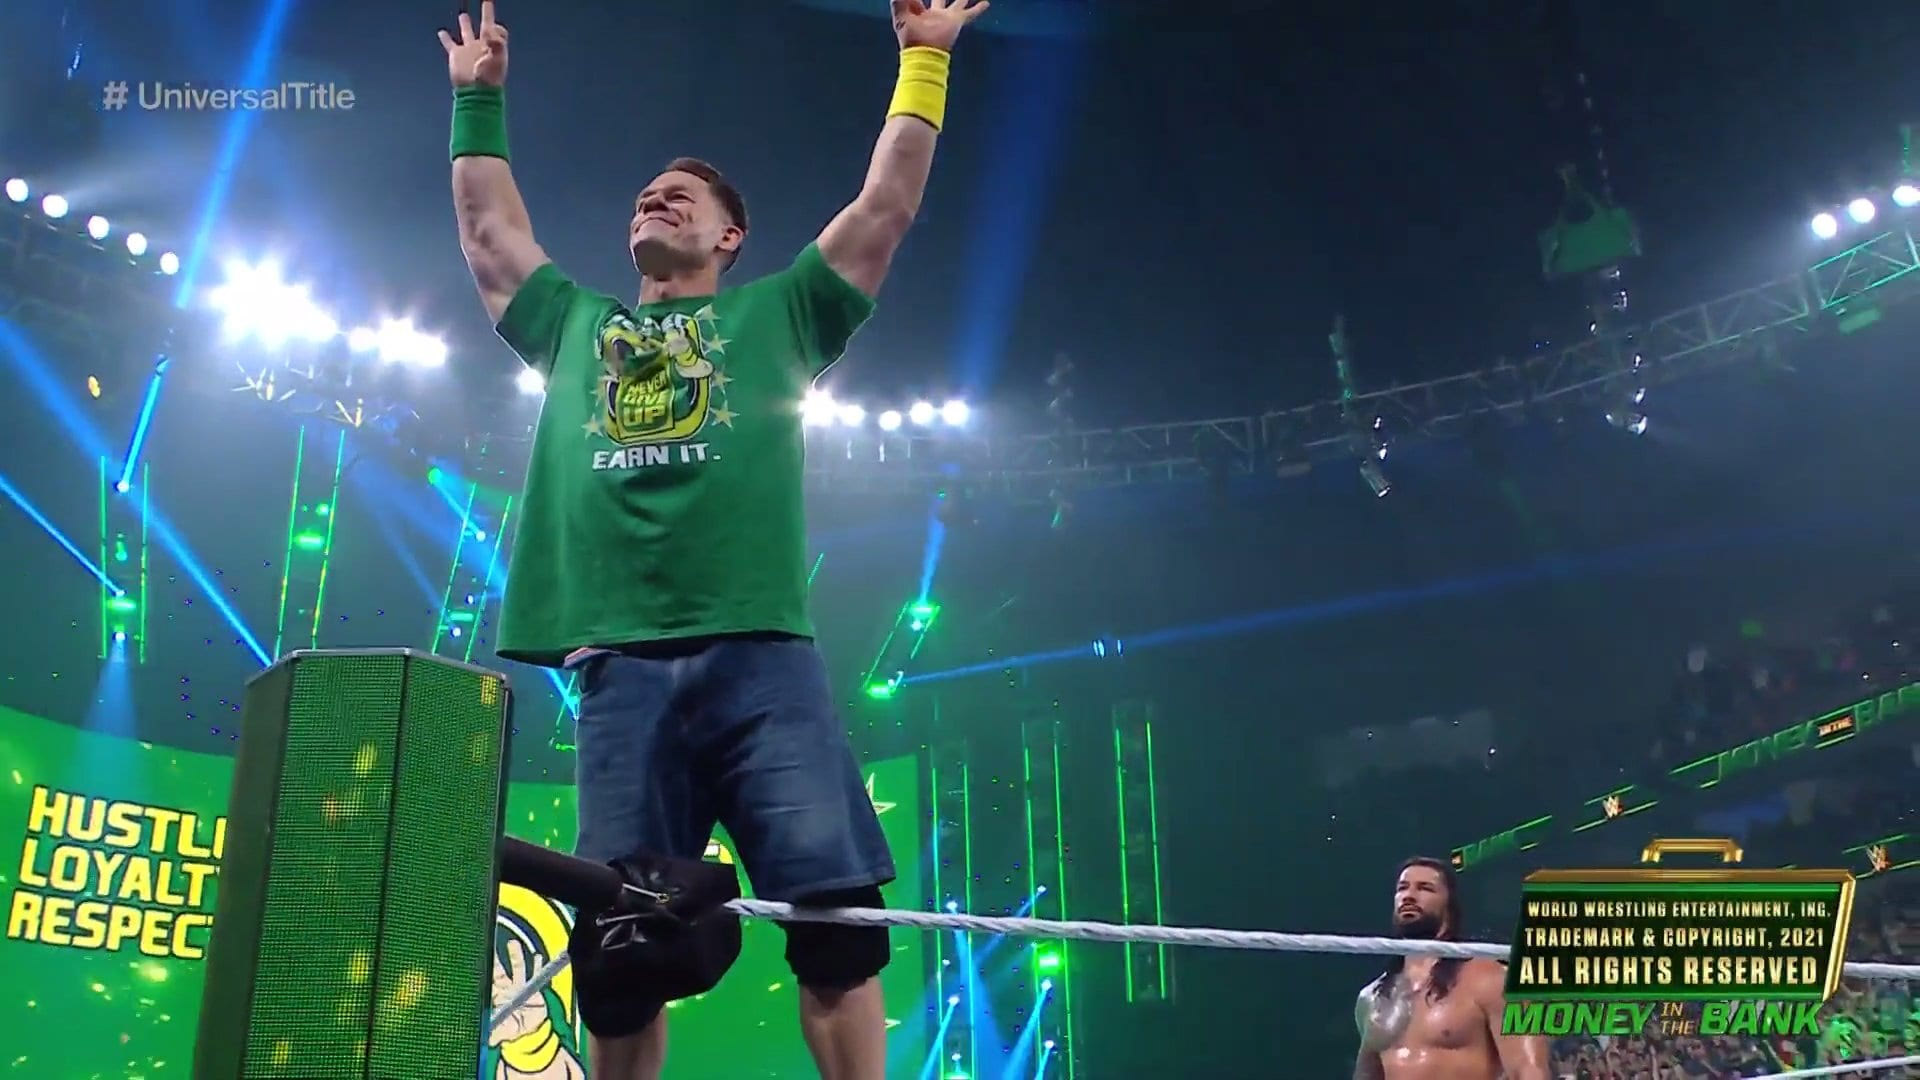 John Cena & Roman Reigns